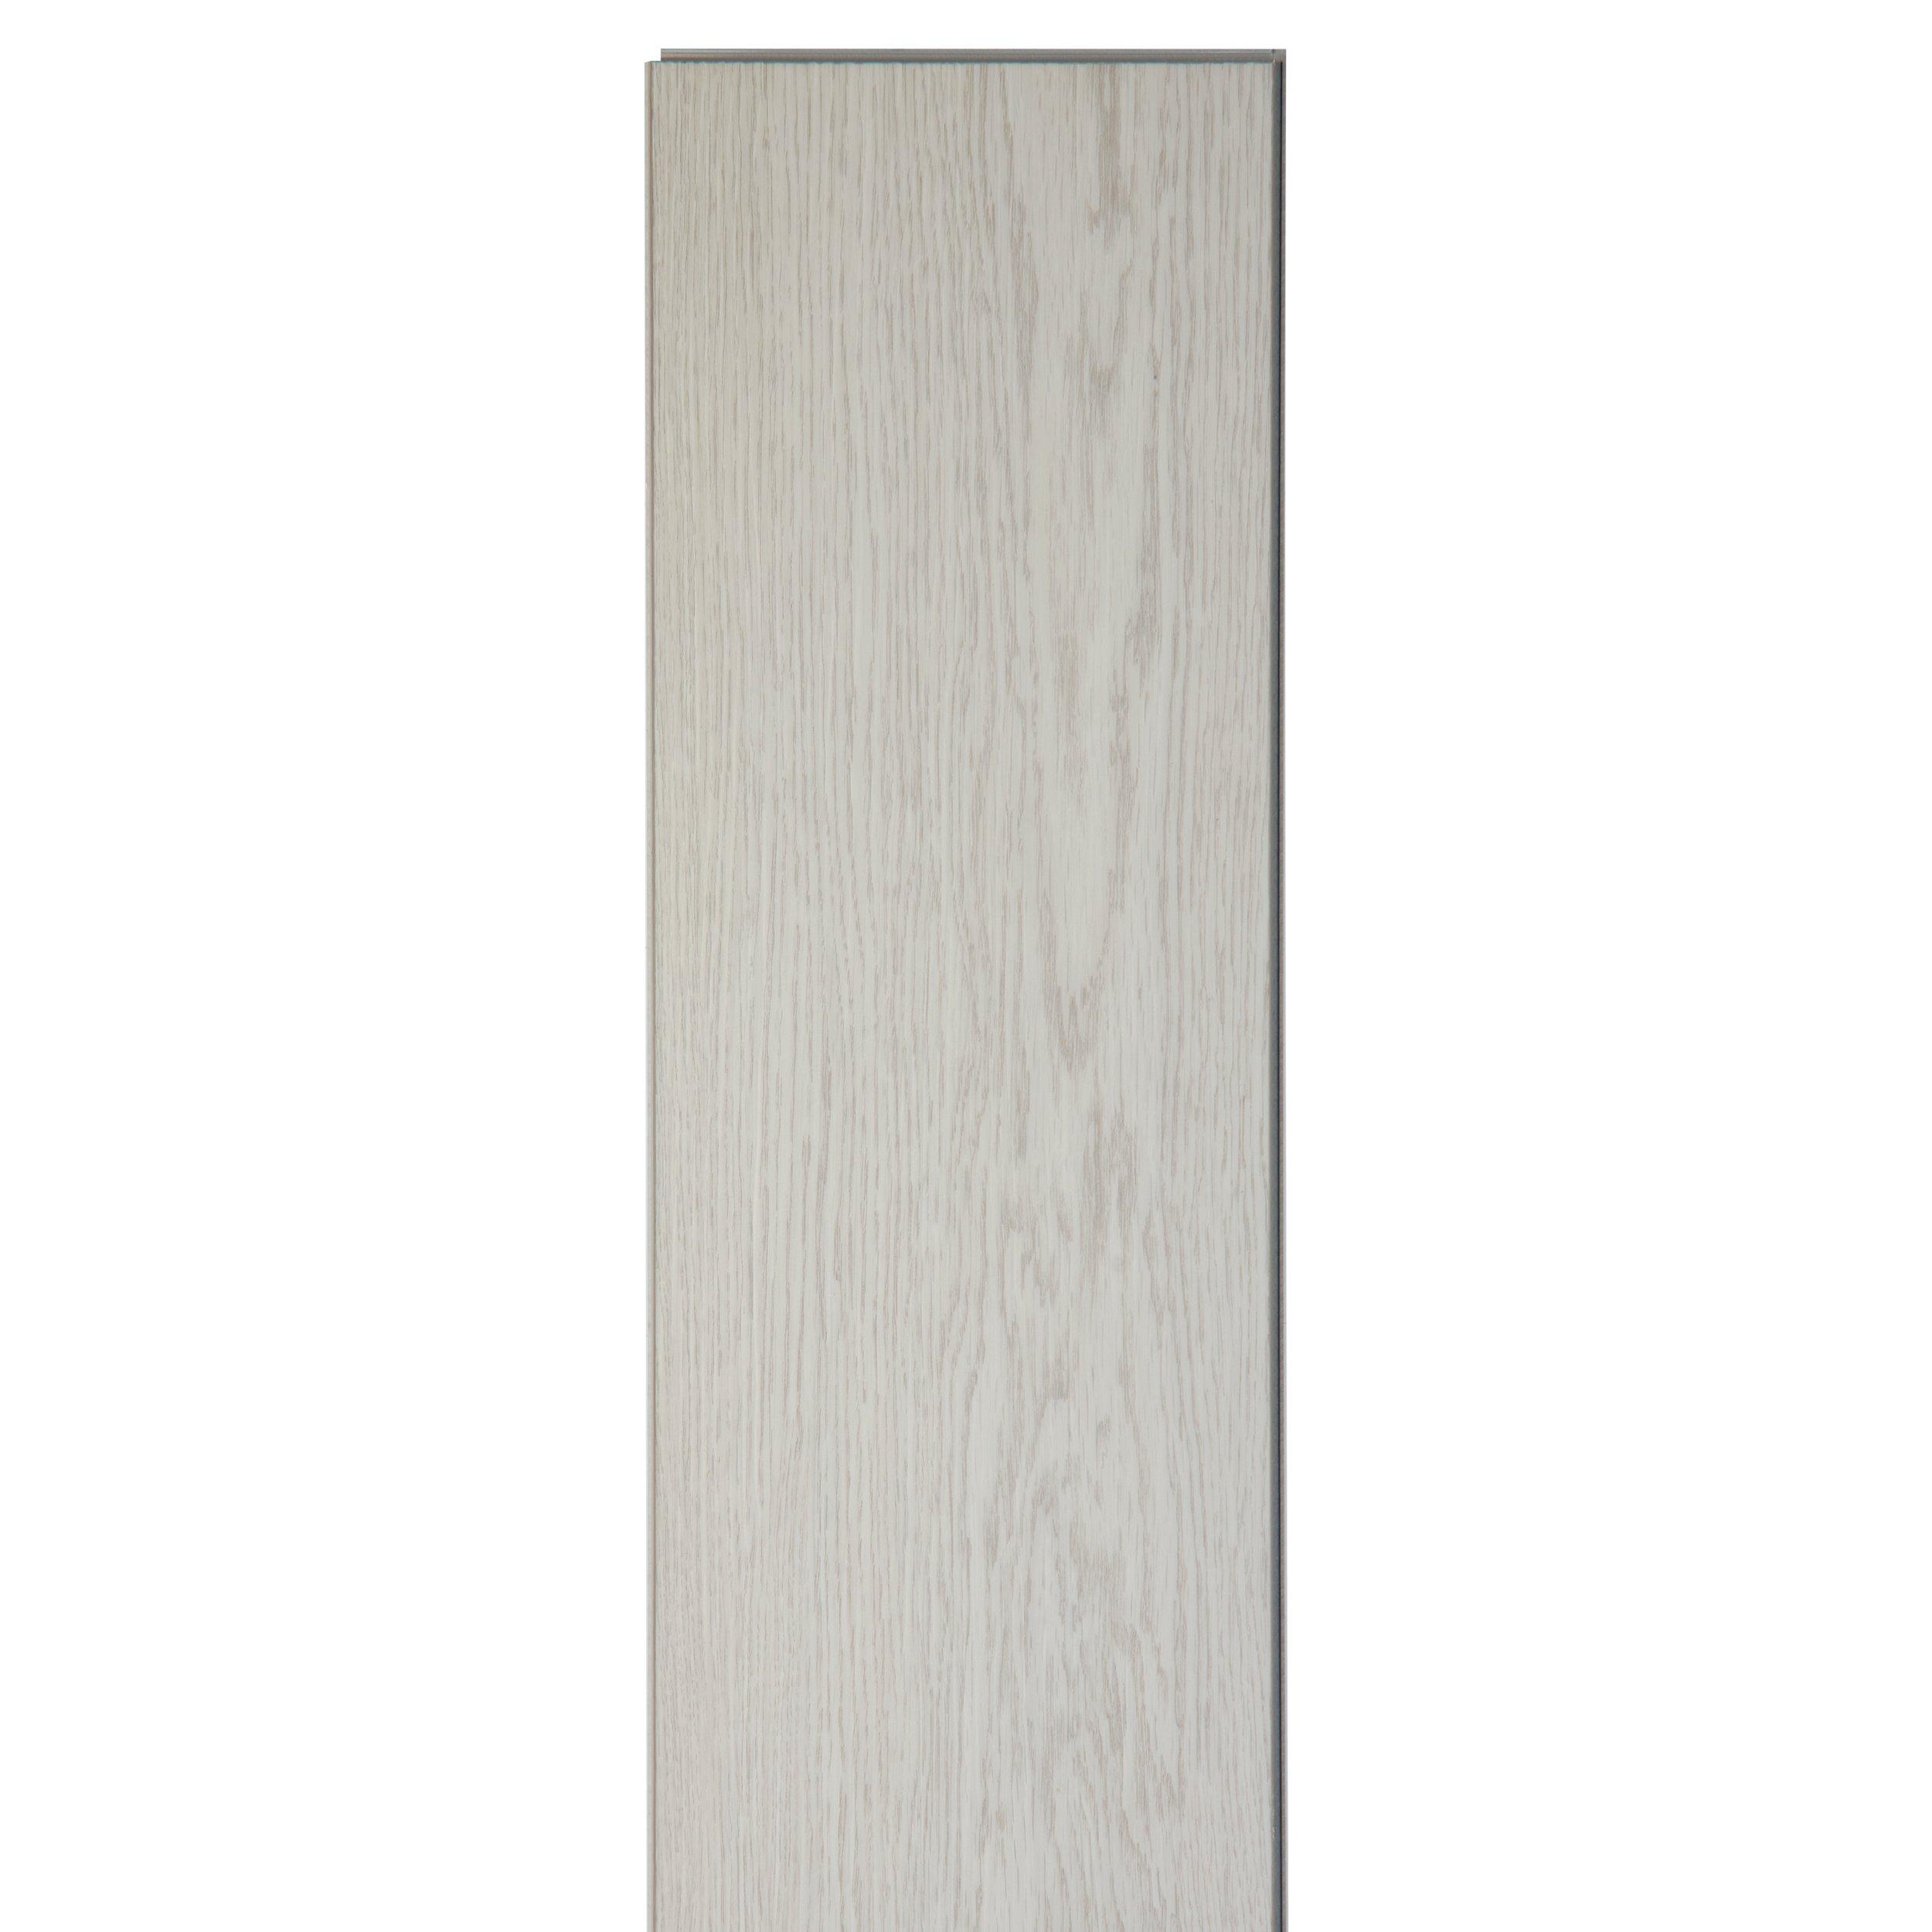 White Birch Woodgrain 68lb 12x18 Paper - Premium & Stylish JAMpaper Product